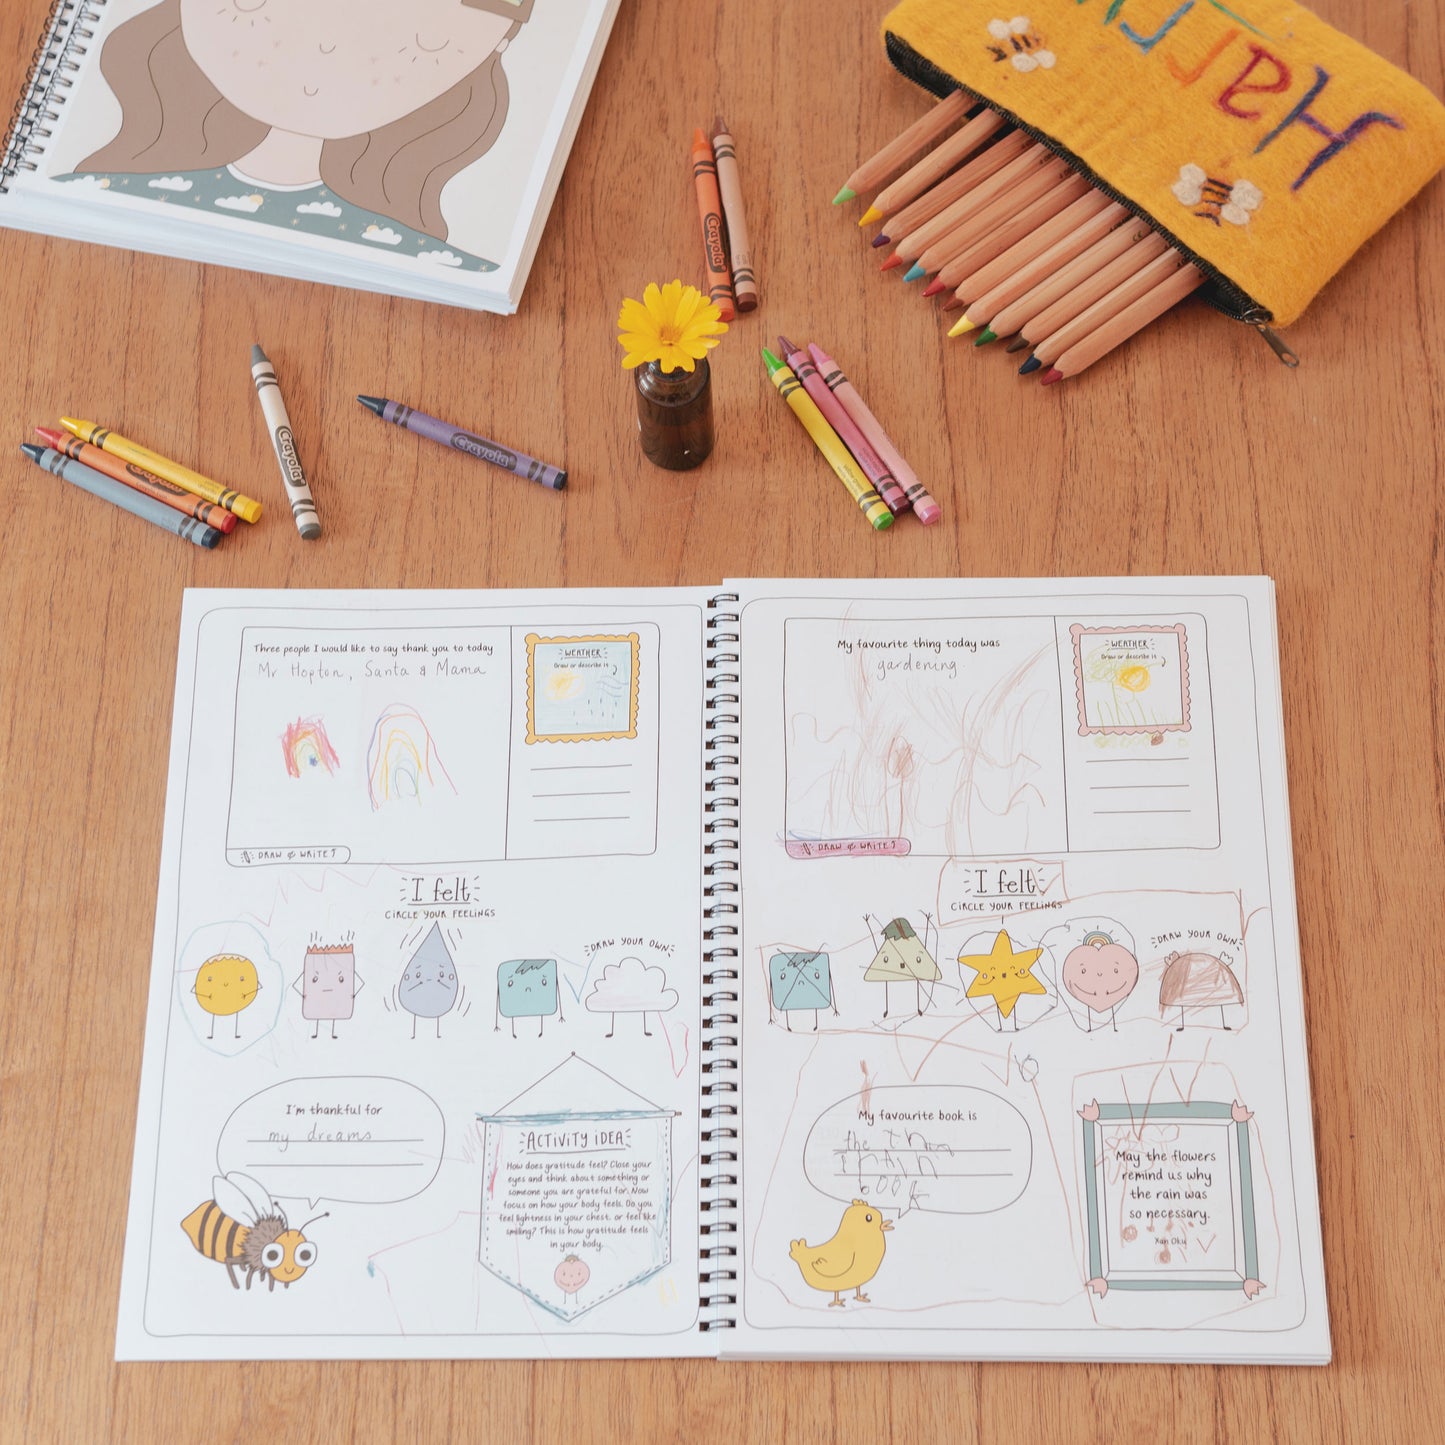 Happiful Journal - a gratitude workbook for children